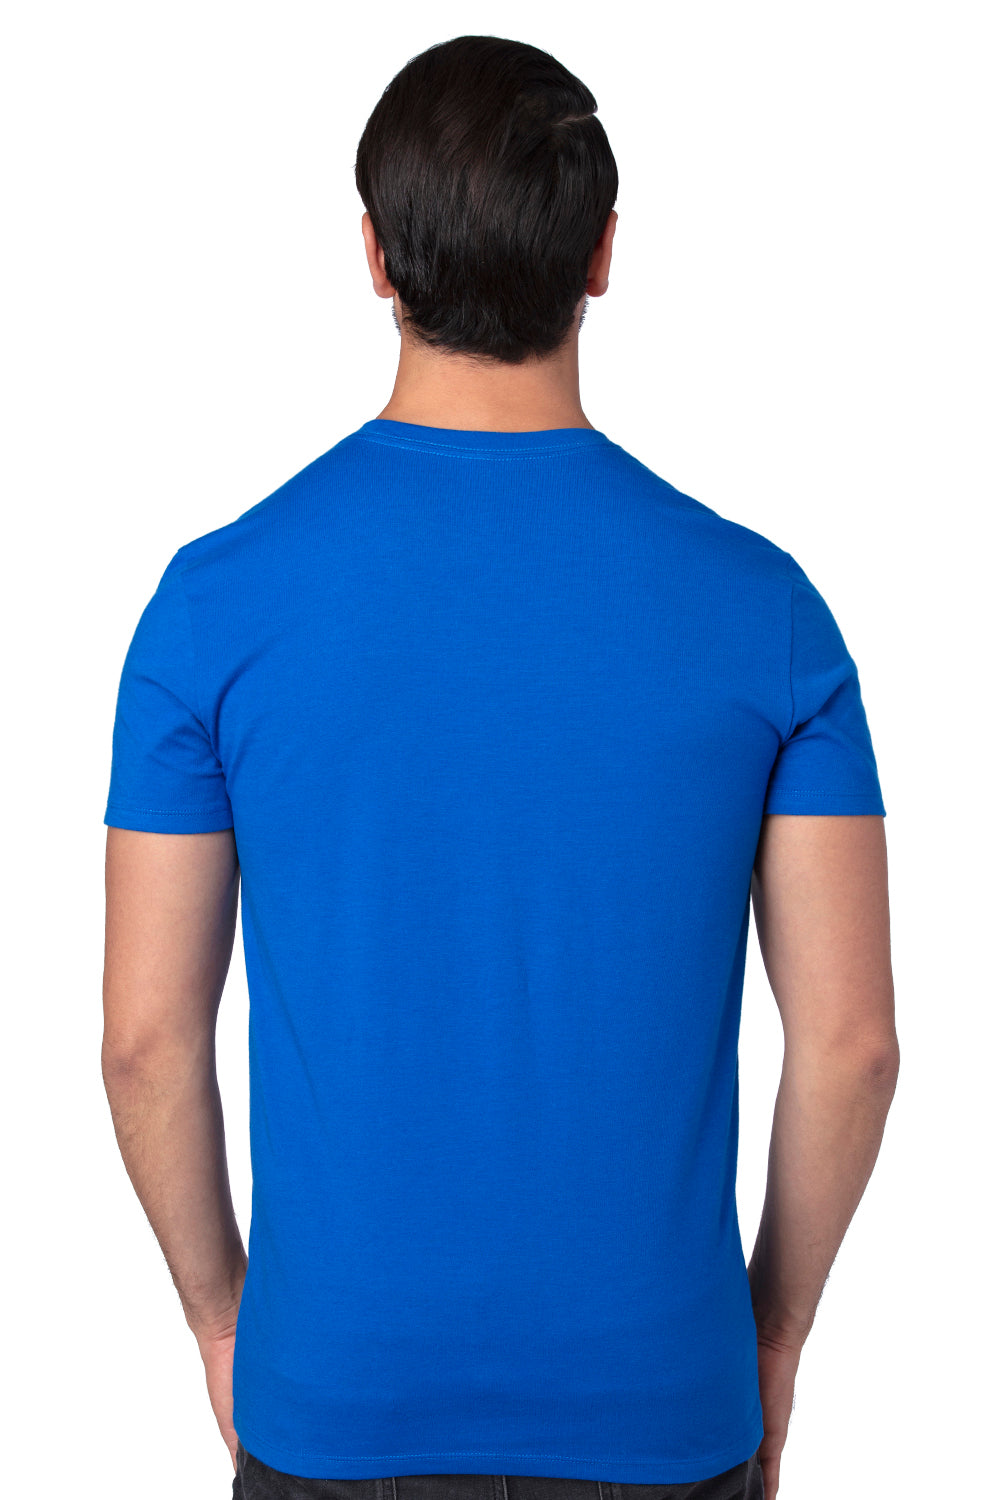 Threadfast Apparel 100A Mens Ultimate Short Sleeve Crewneck T-Shirt Royal Blue Back